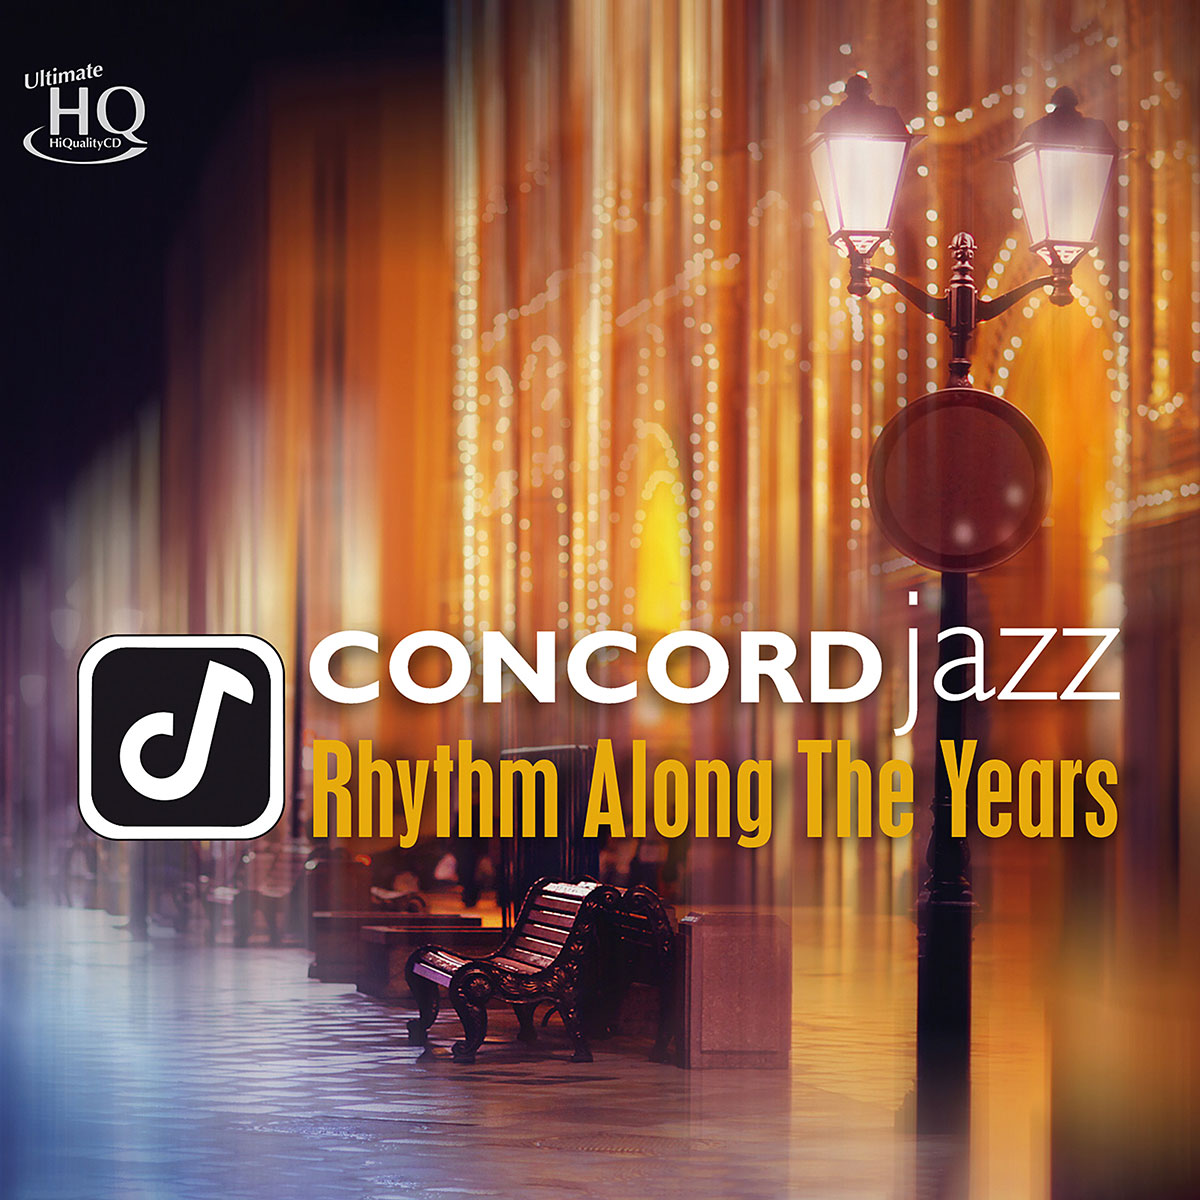 Concord Jazz - Rhythm Along the Years